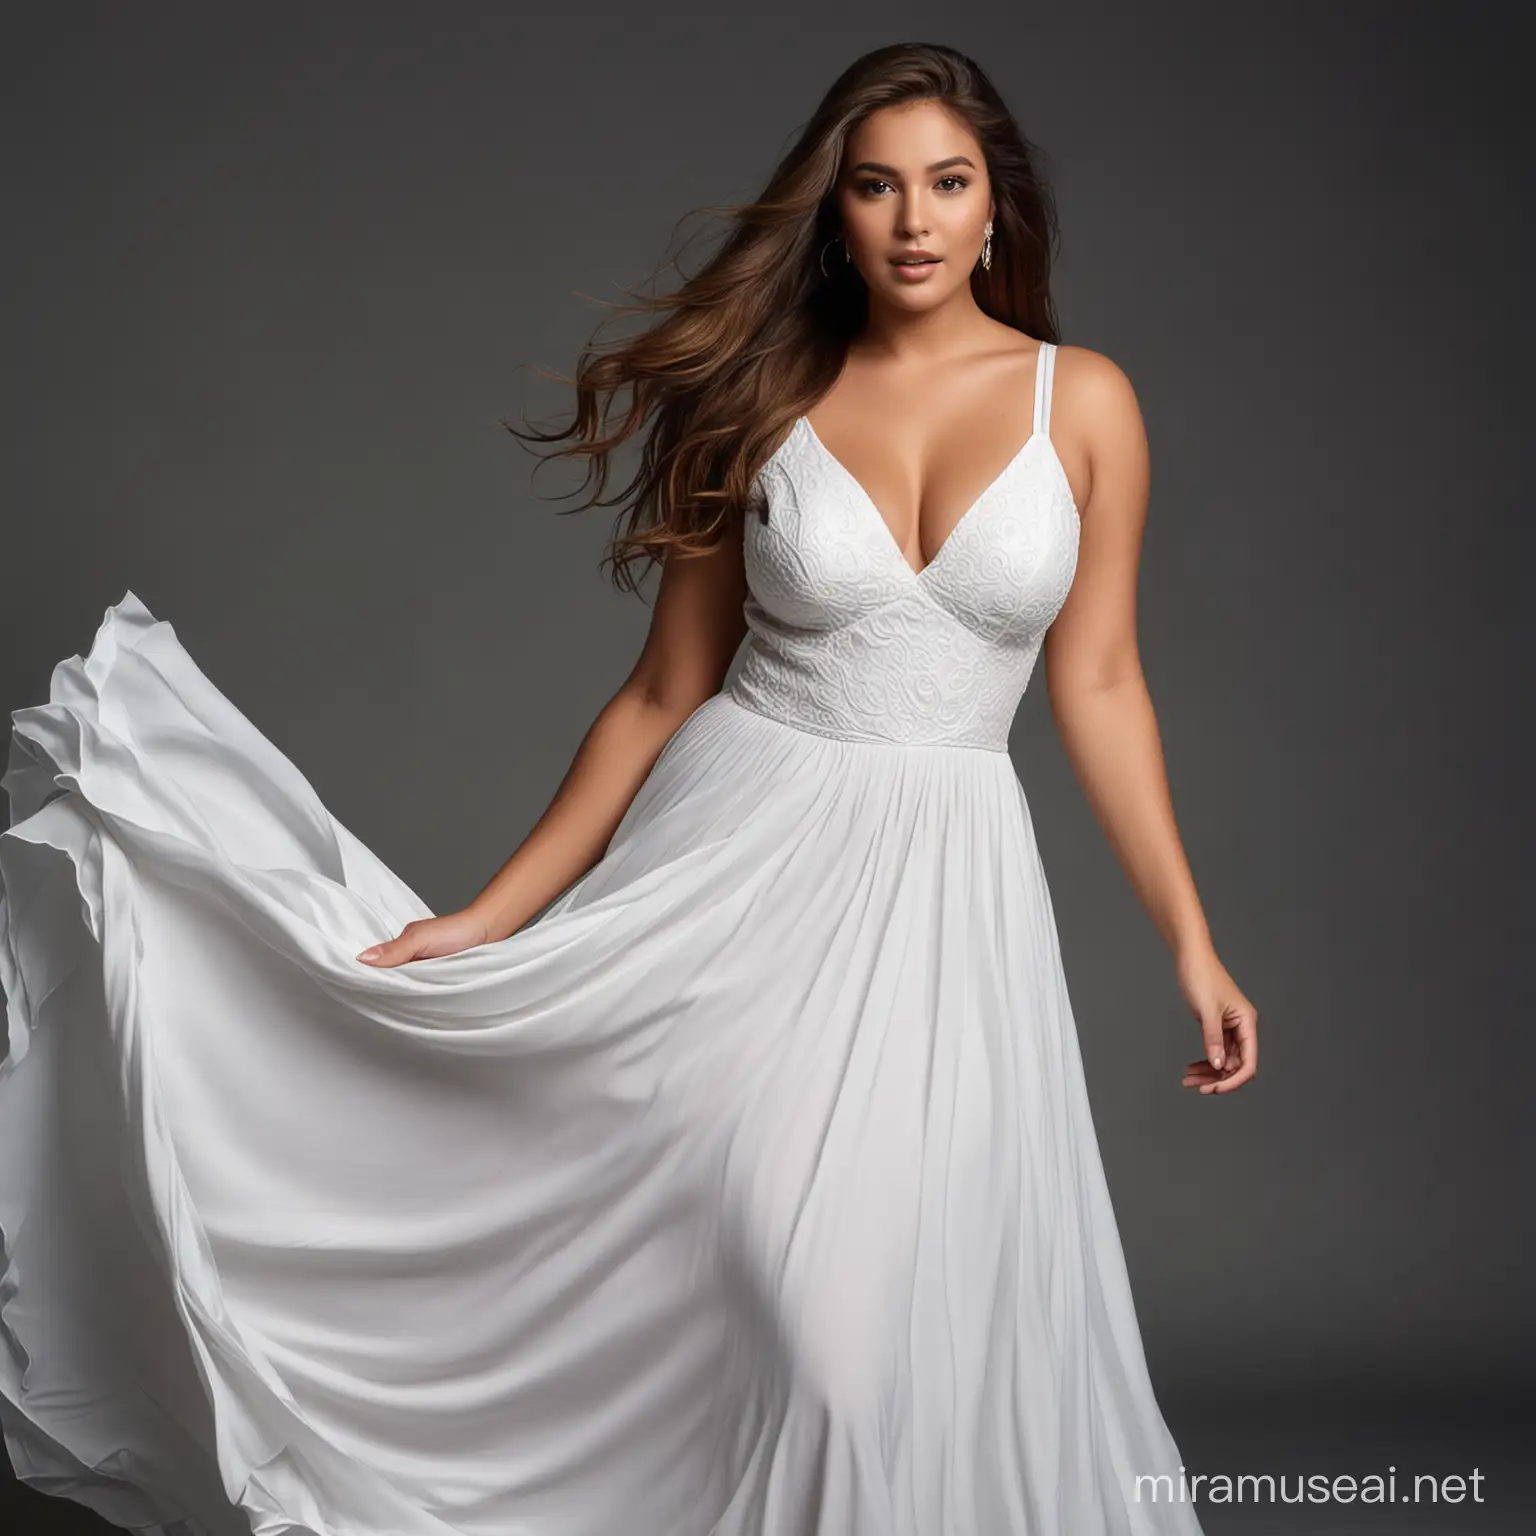 Stylish Plus Size Model in Luxury White Dress Dancing Studio Vogue Photoshoot